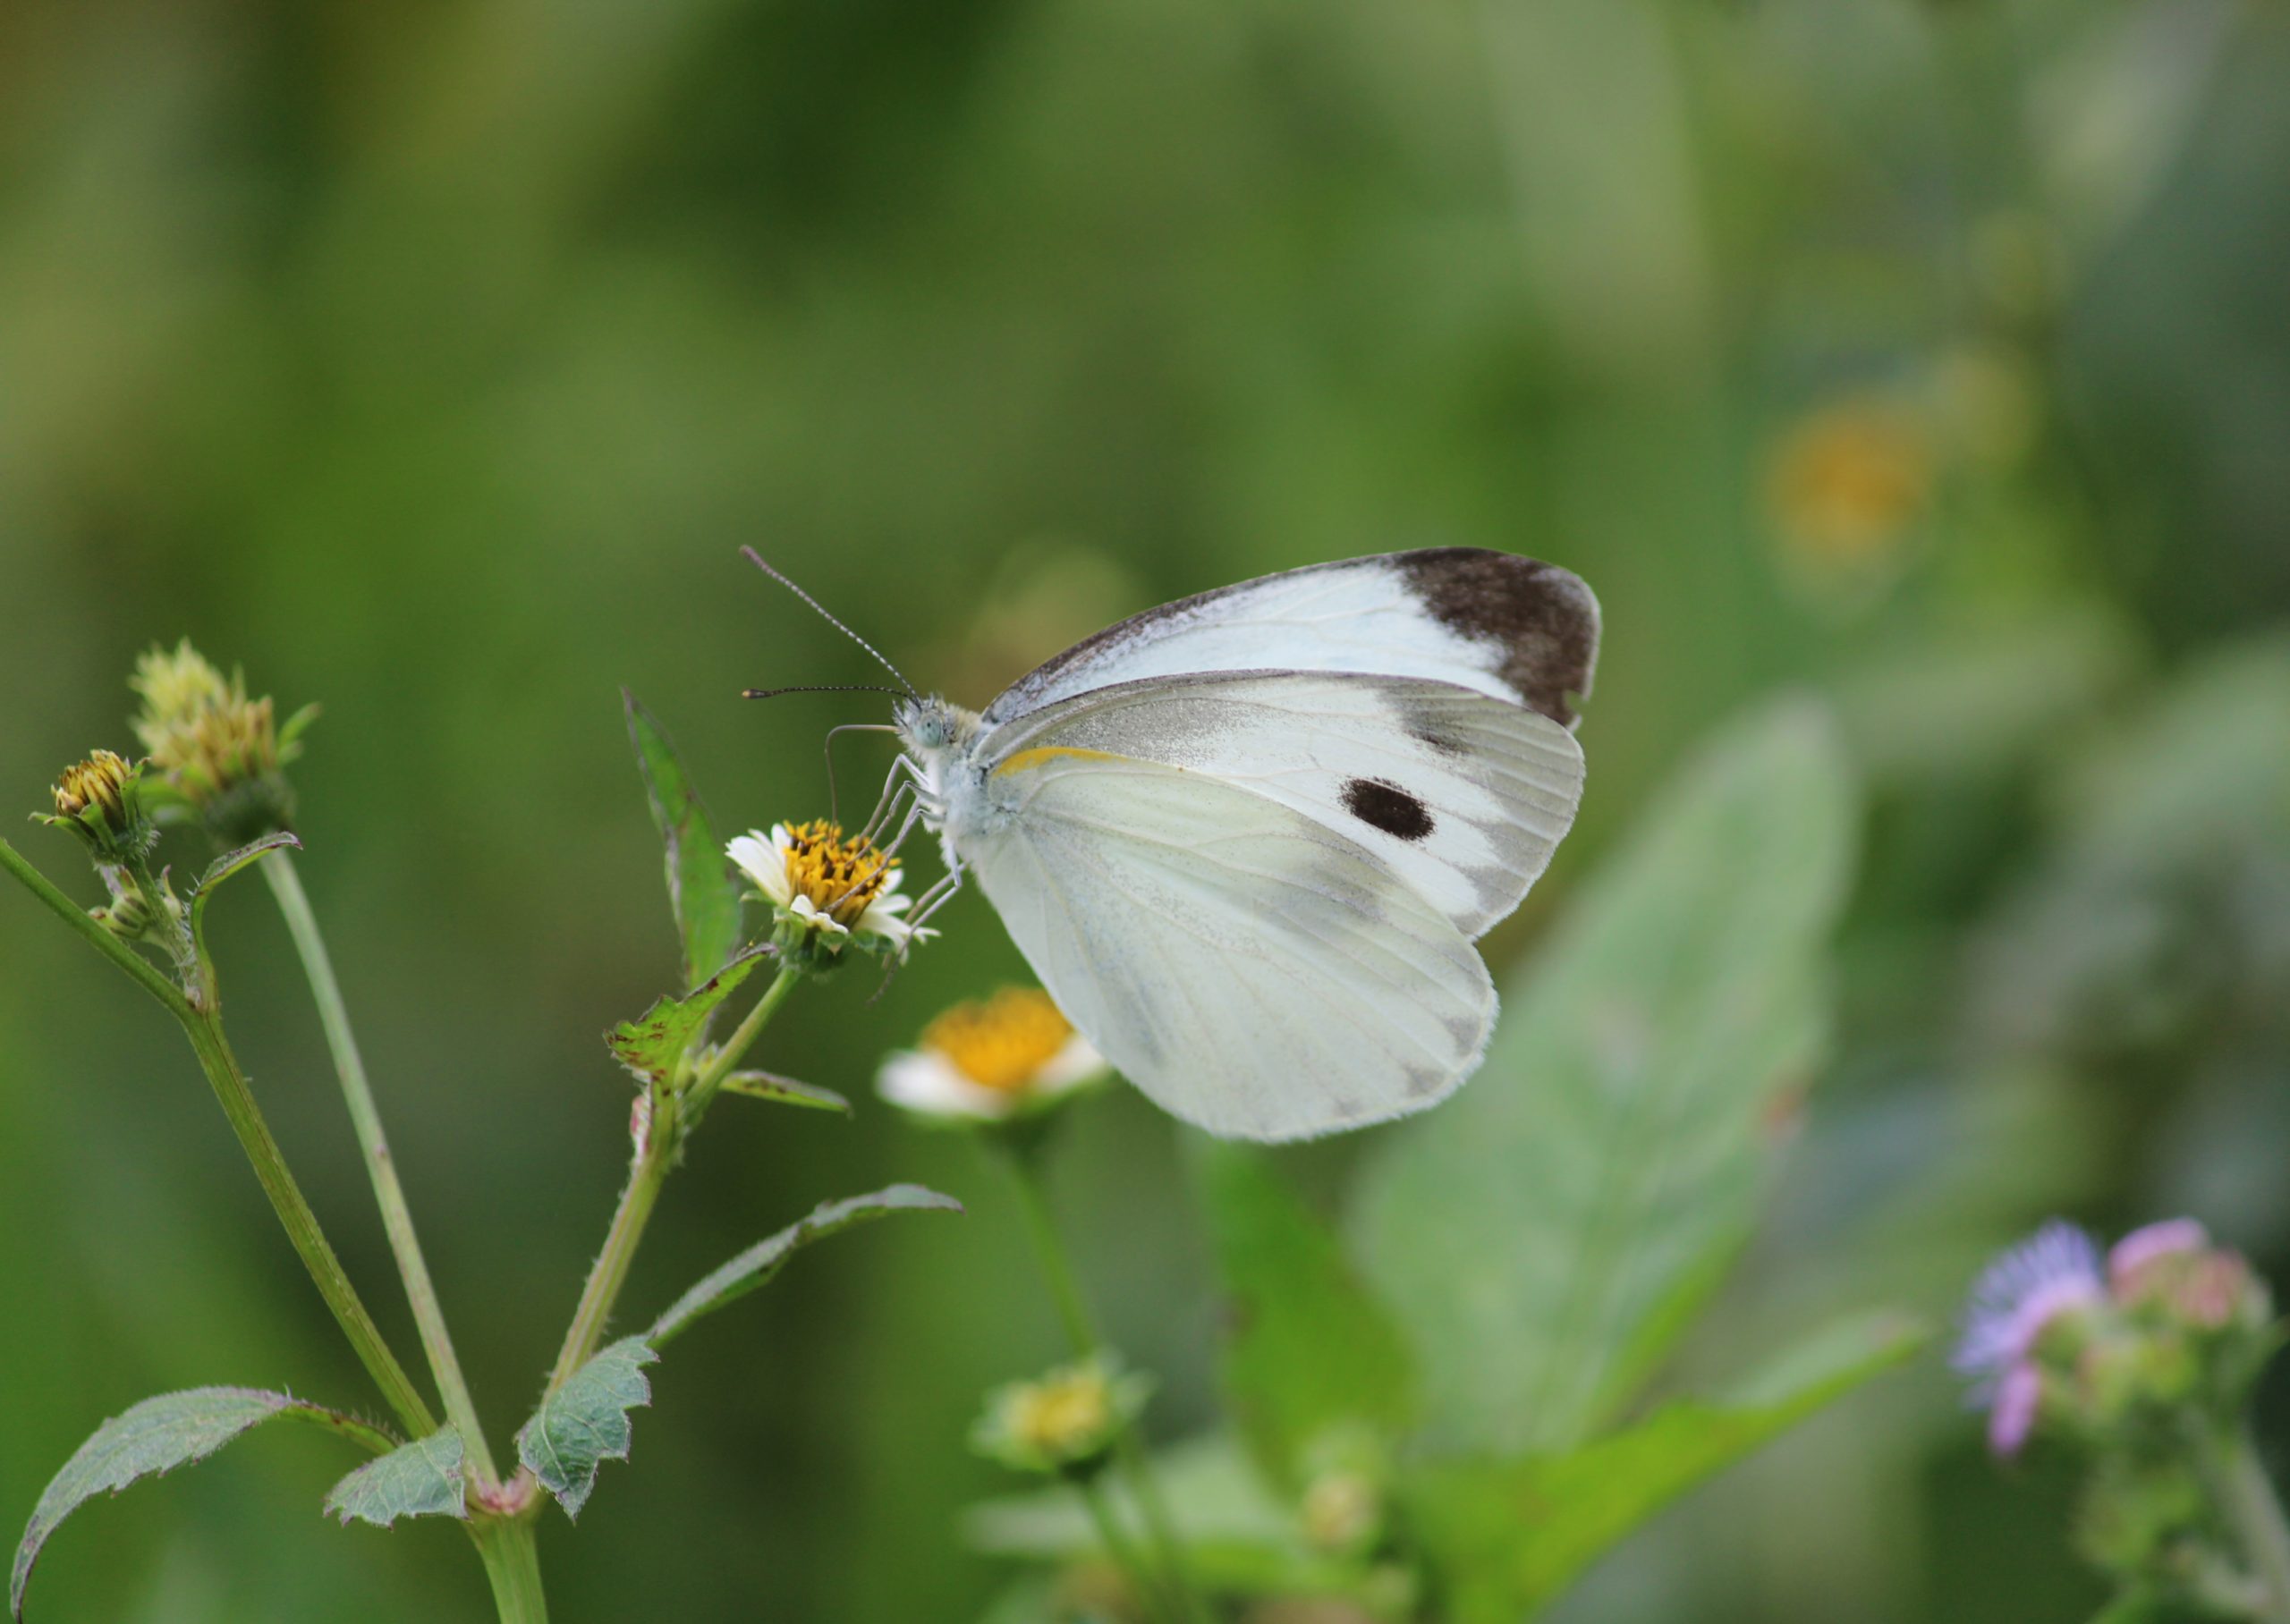 A butterfly on a flower